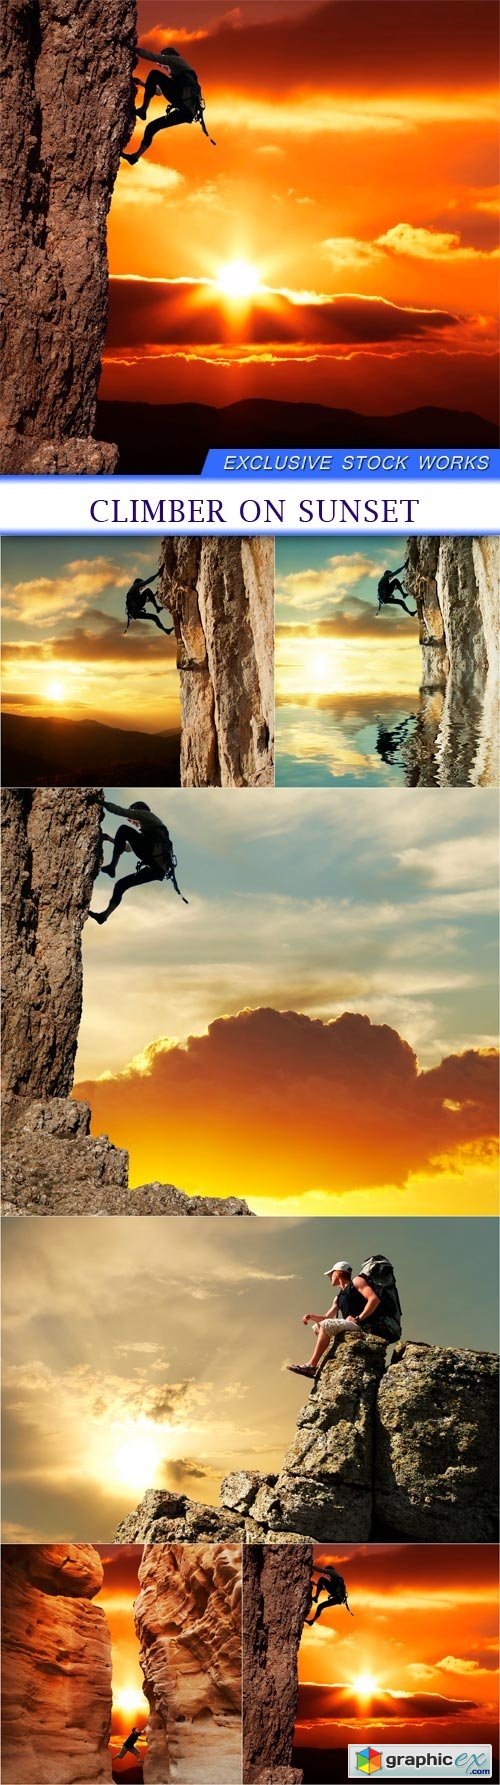 climber on sunset 6X JPEG